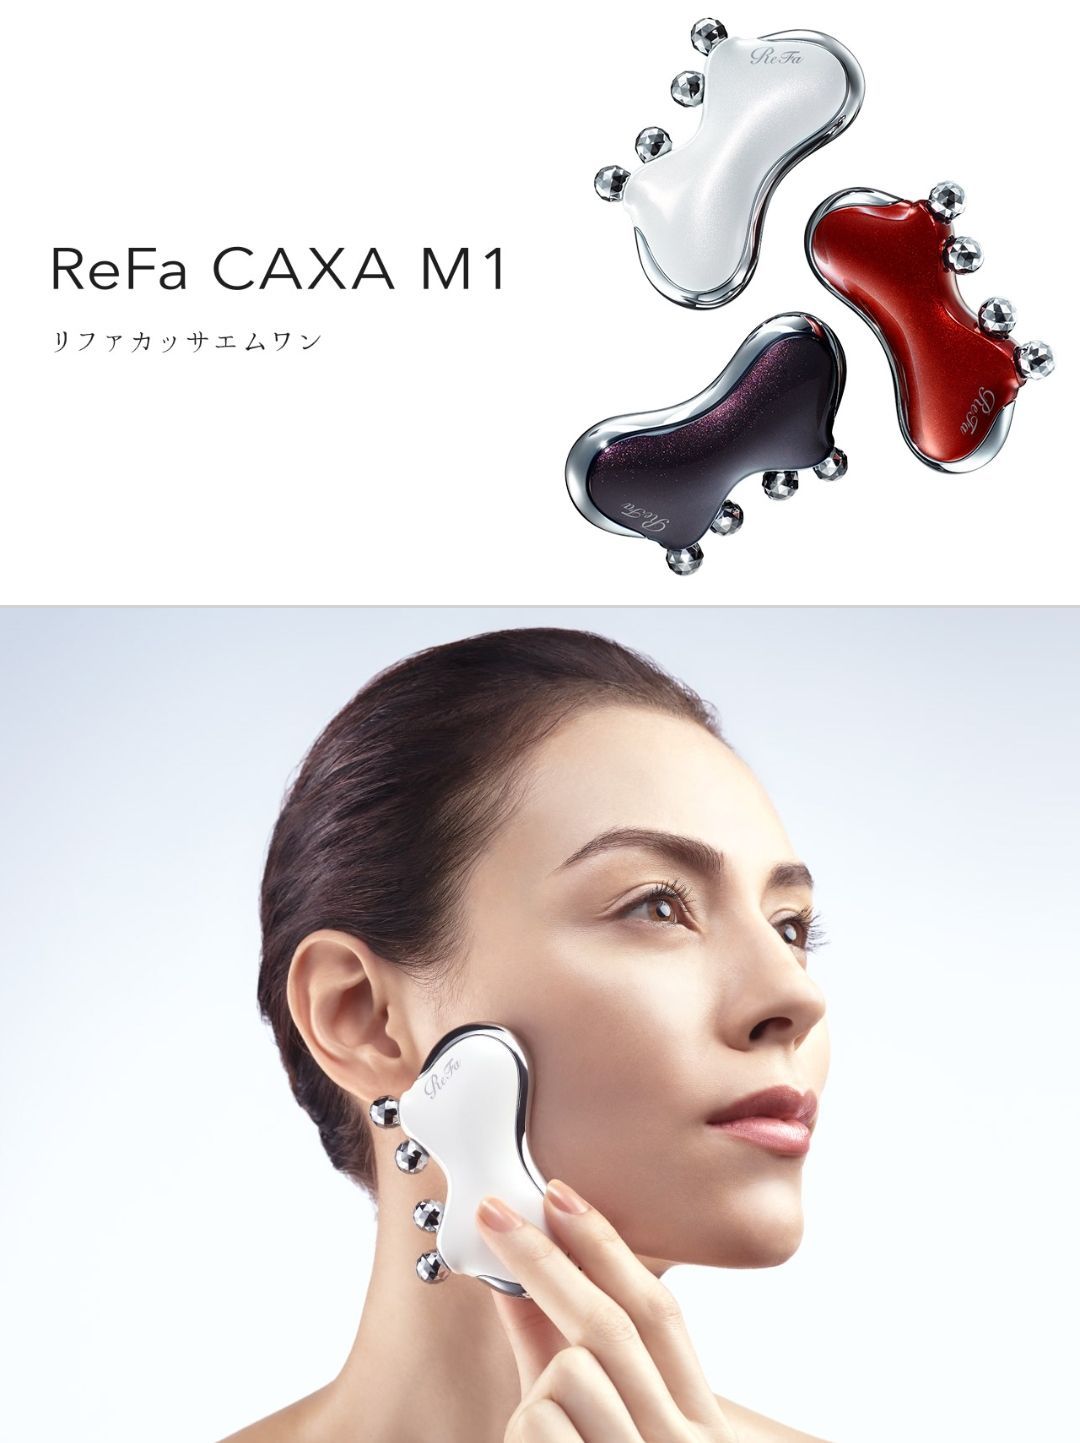 ReFa CAXA M1 Pearl White リファカッサエムワン ホワイト - 美顔用品